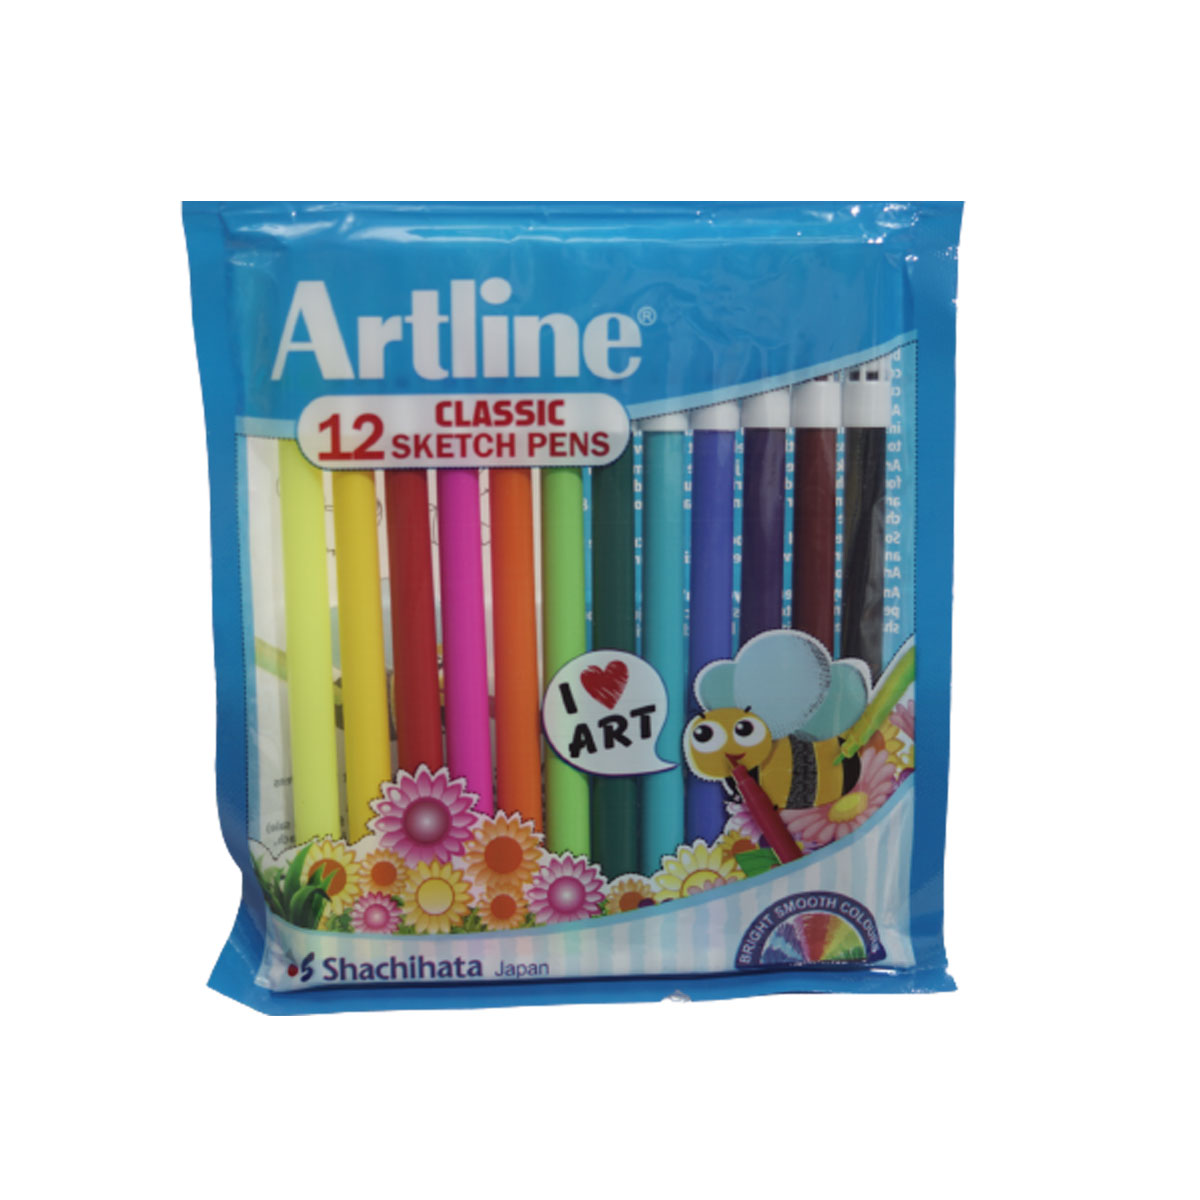 Artline Love Art Classic 12 Different Color Sketch Pen Set SKU 20308